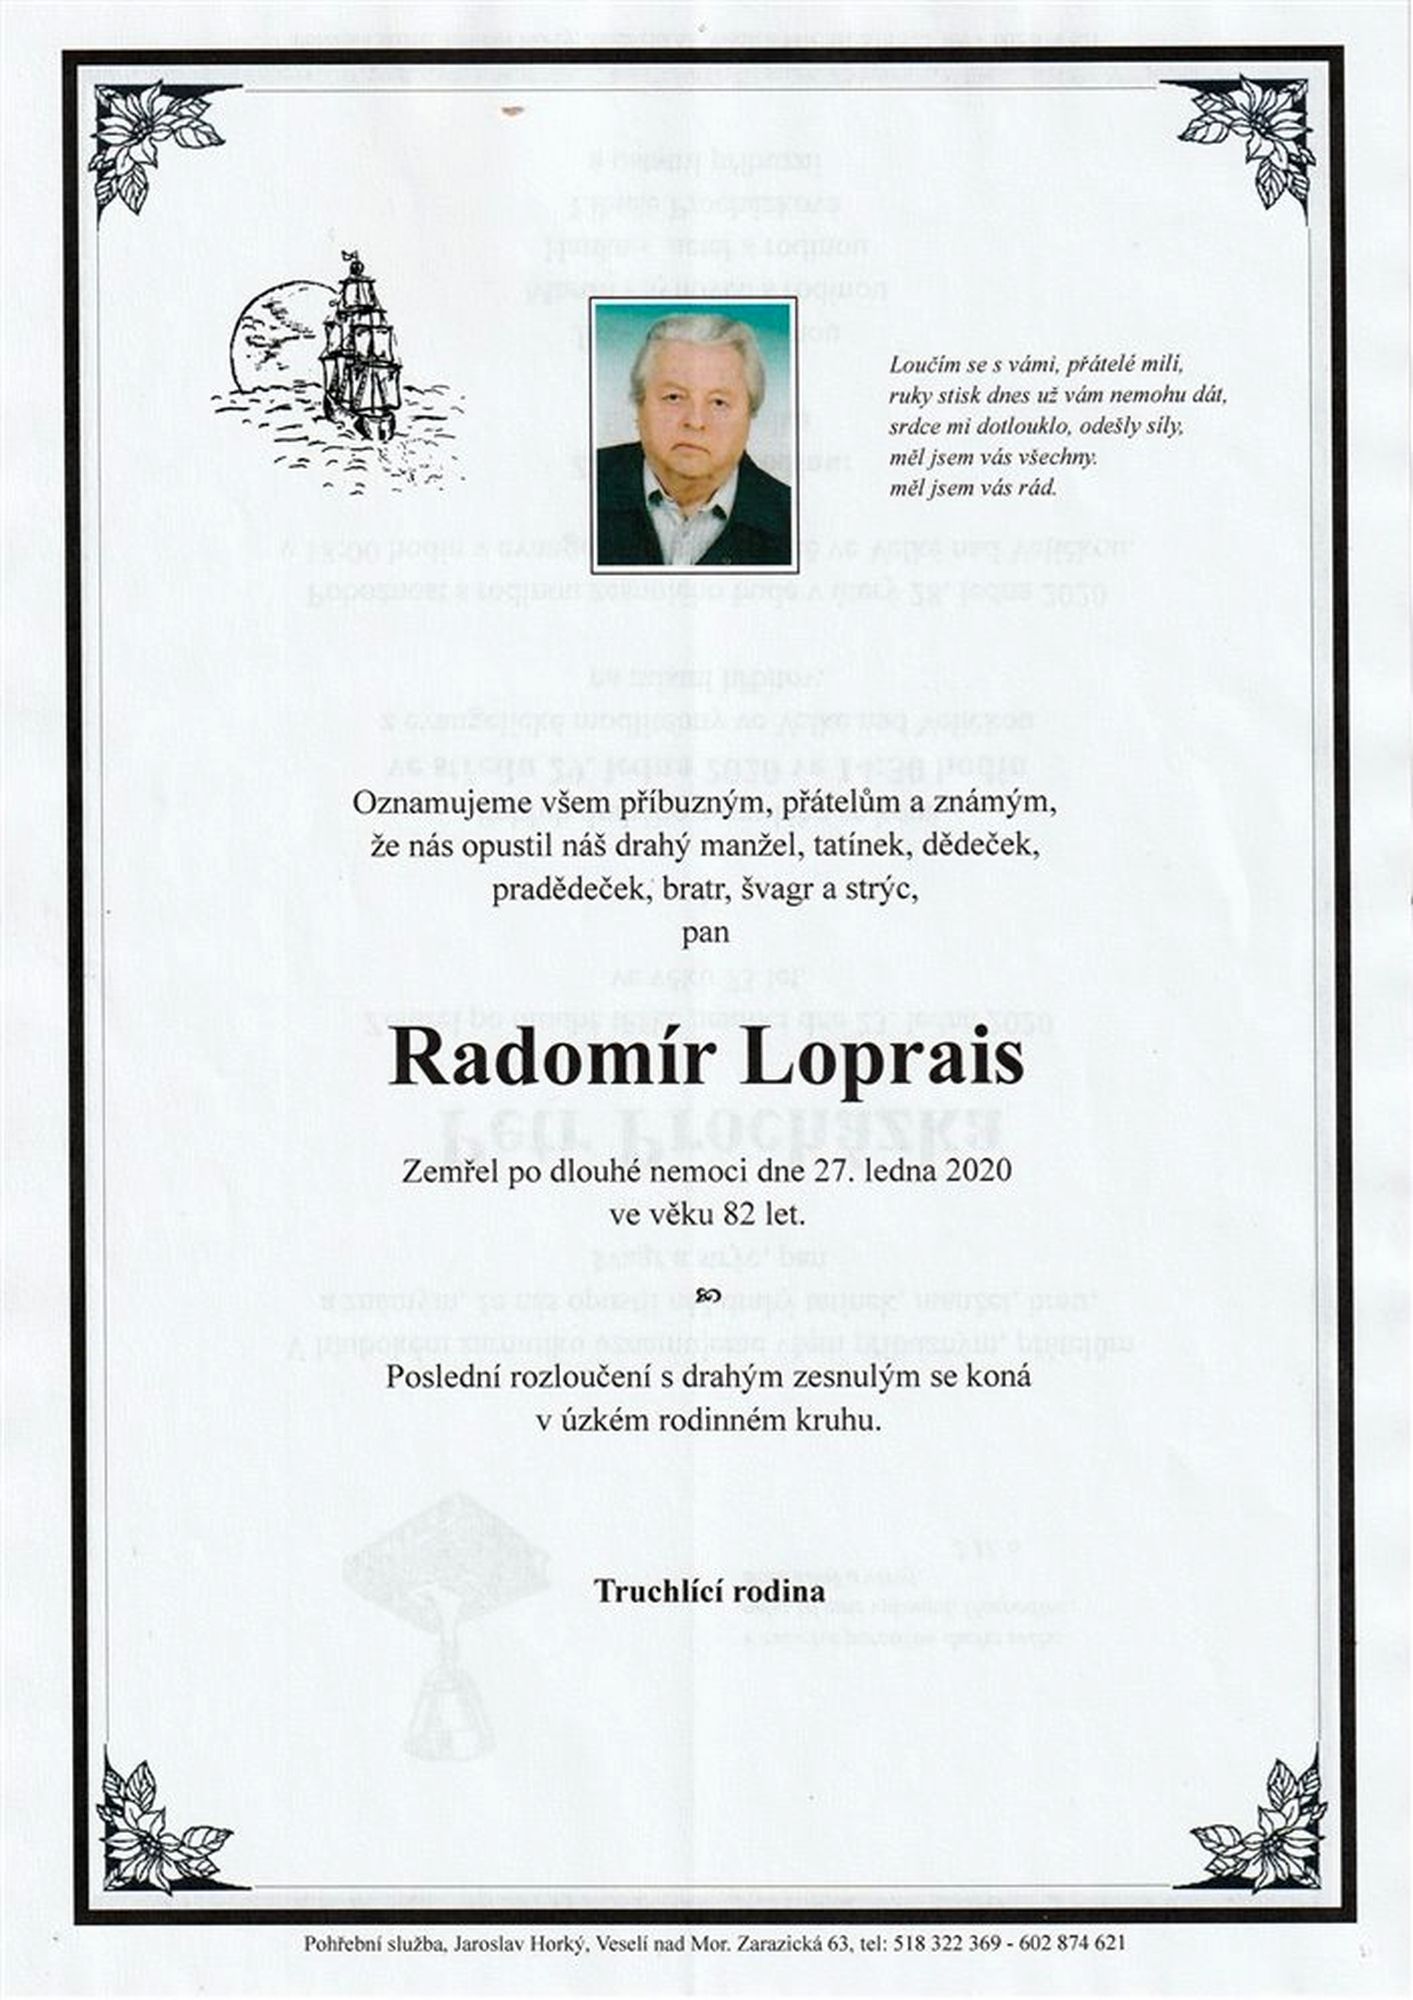 Radomír Loprais